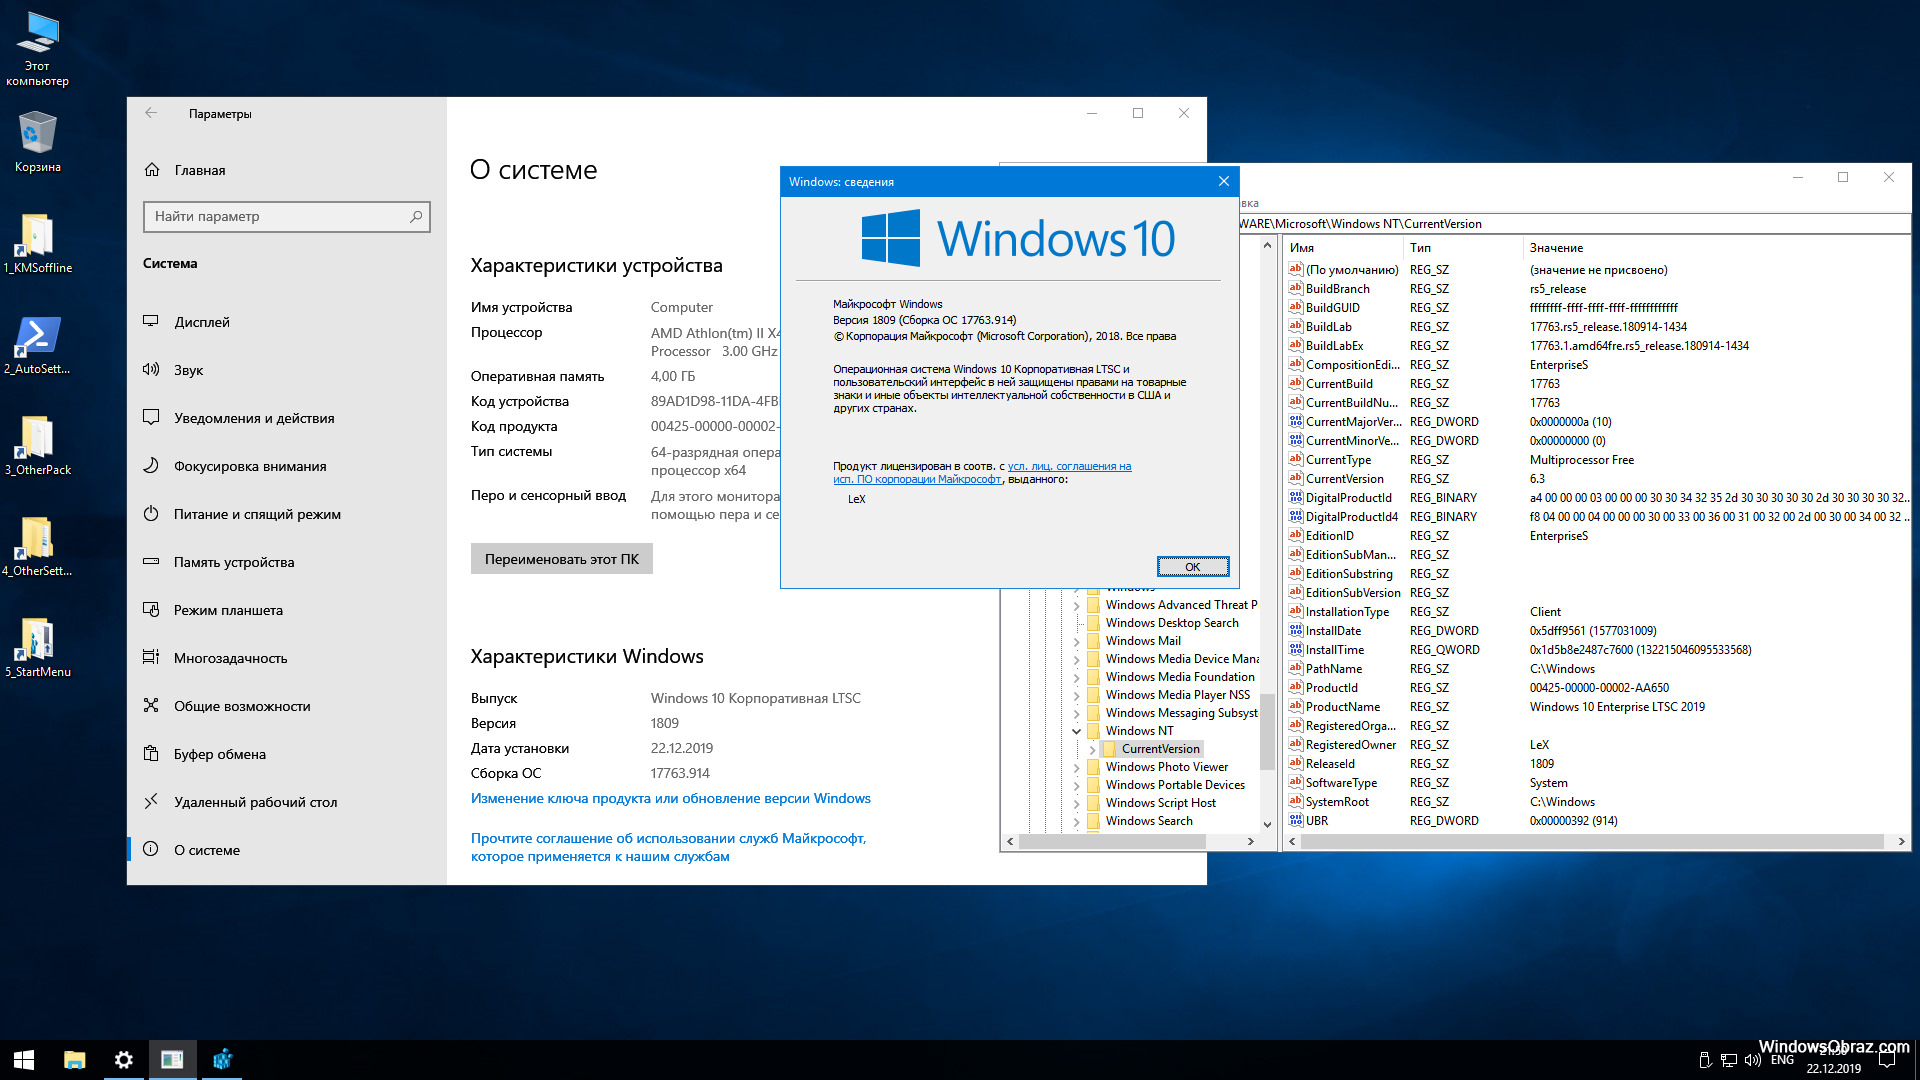 Виндовс 10 информация. Windows 10 Enterprise (корпоративная). Винда 10. Редакции виндовс 10. Система виндовс 10.